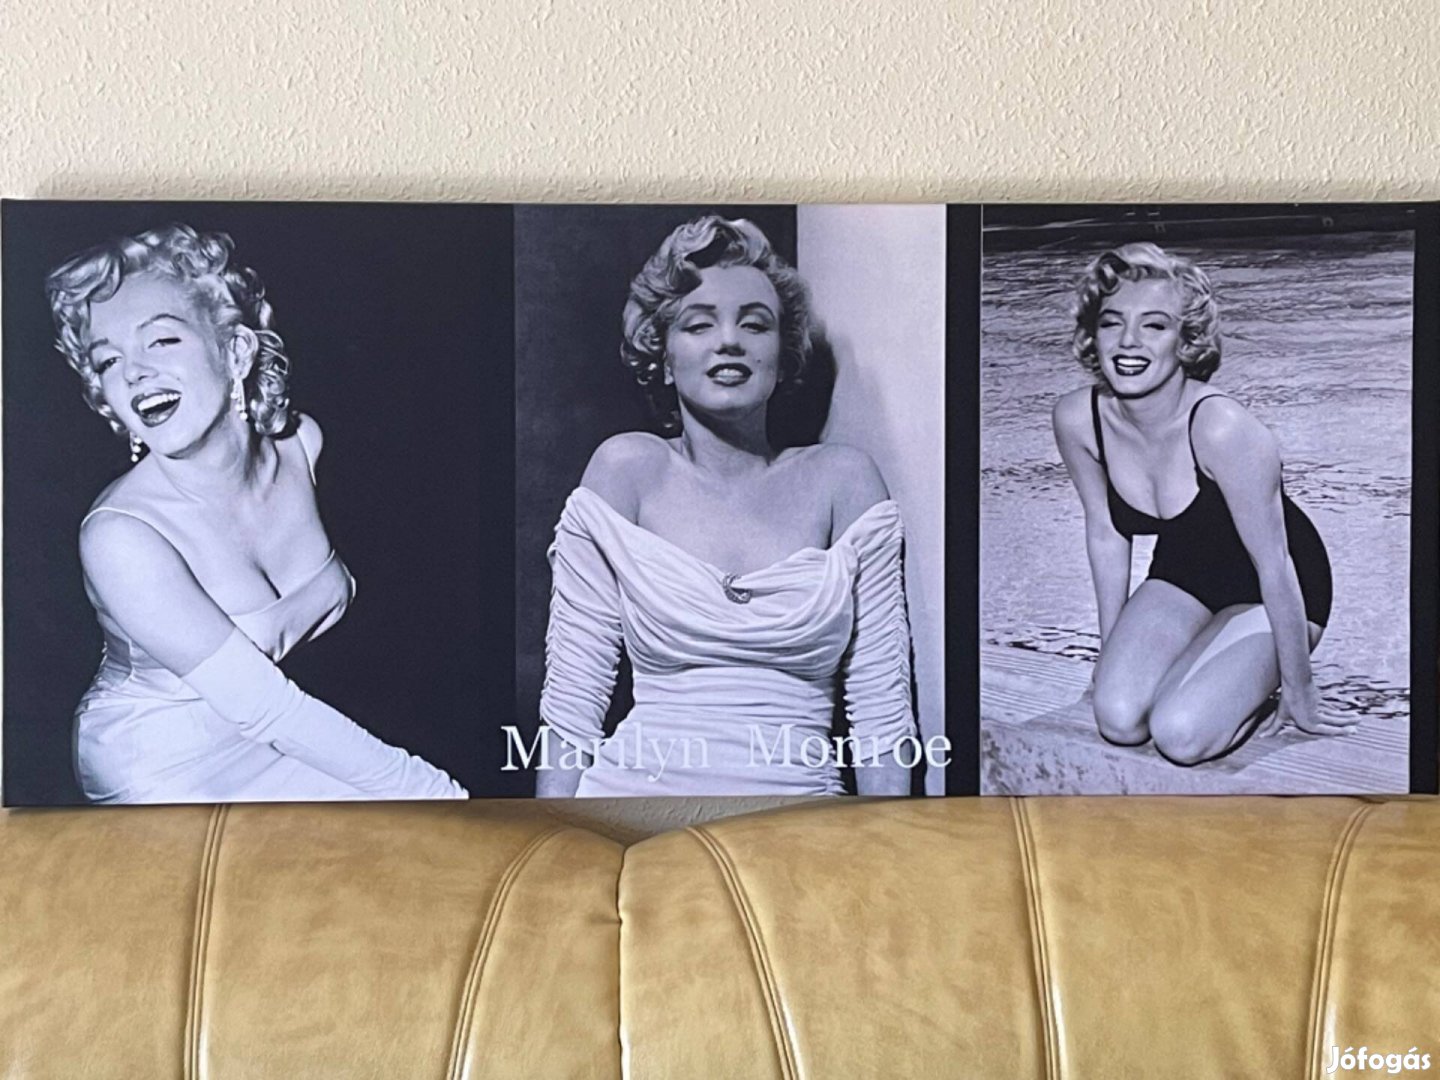 Fali kép -Marilyn Monroe